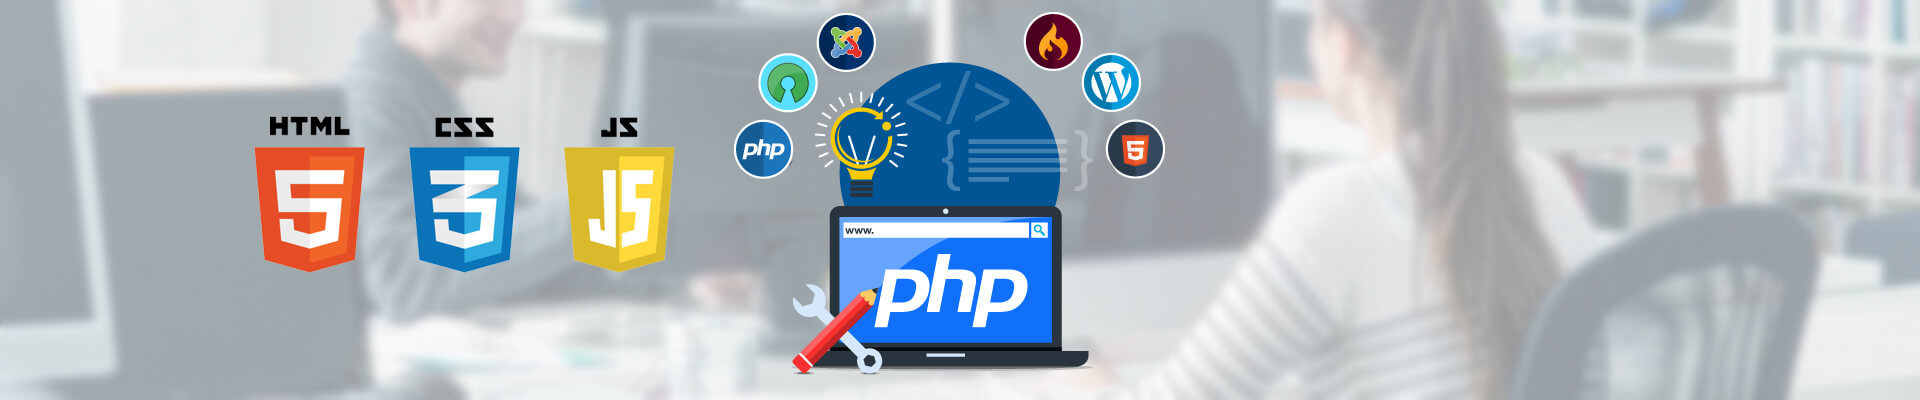 PHP web development services company in USA